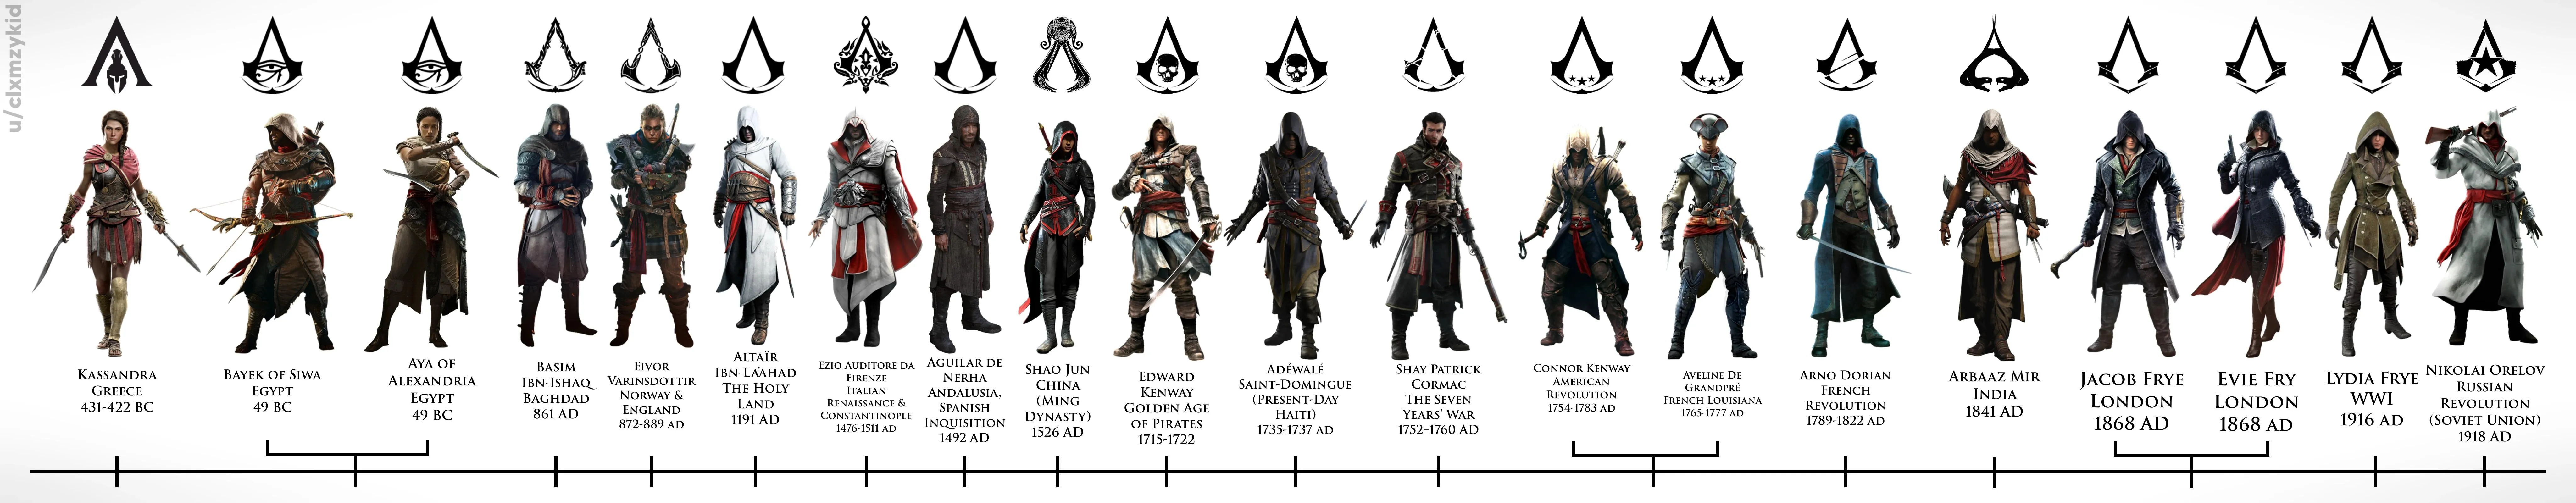 хронология персонажей Assassin's Creed